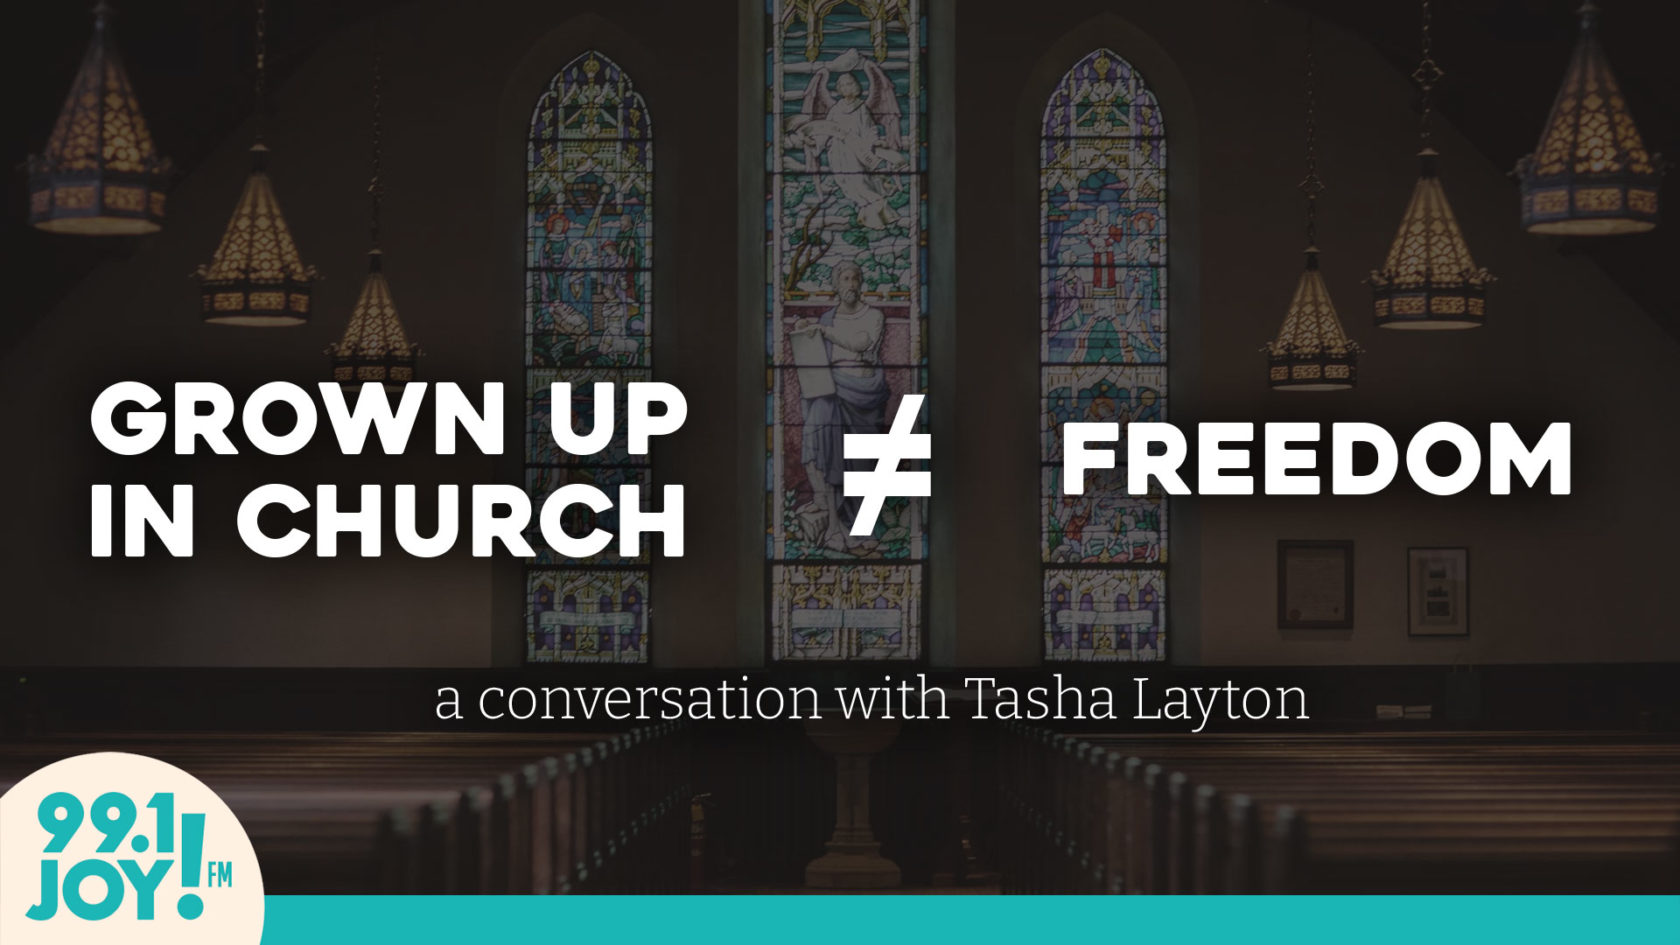 I grew up in church. But I don't feel free. | with Tasha Layton